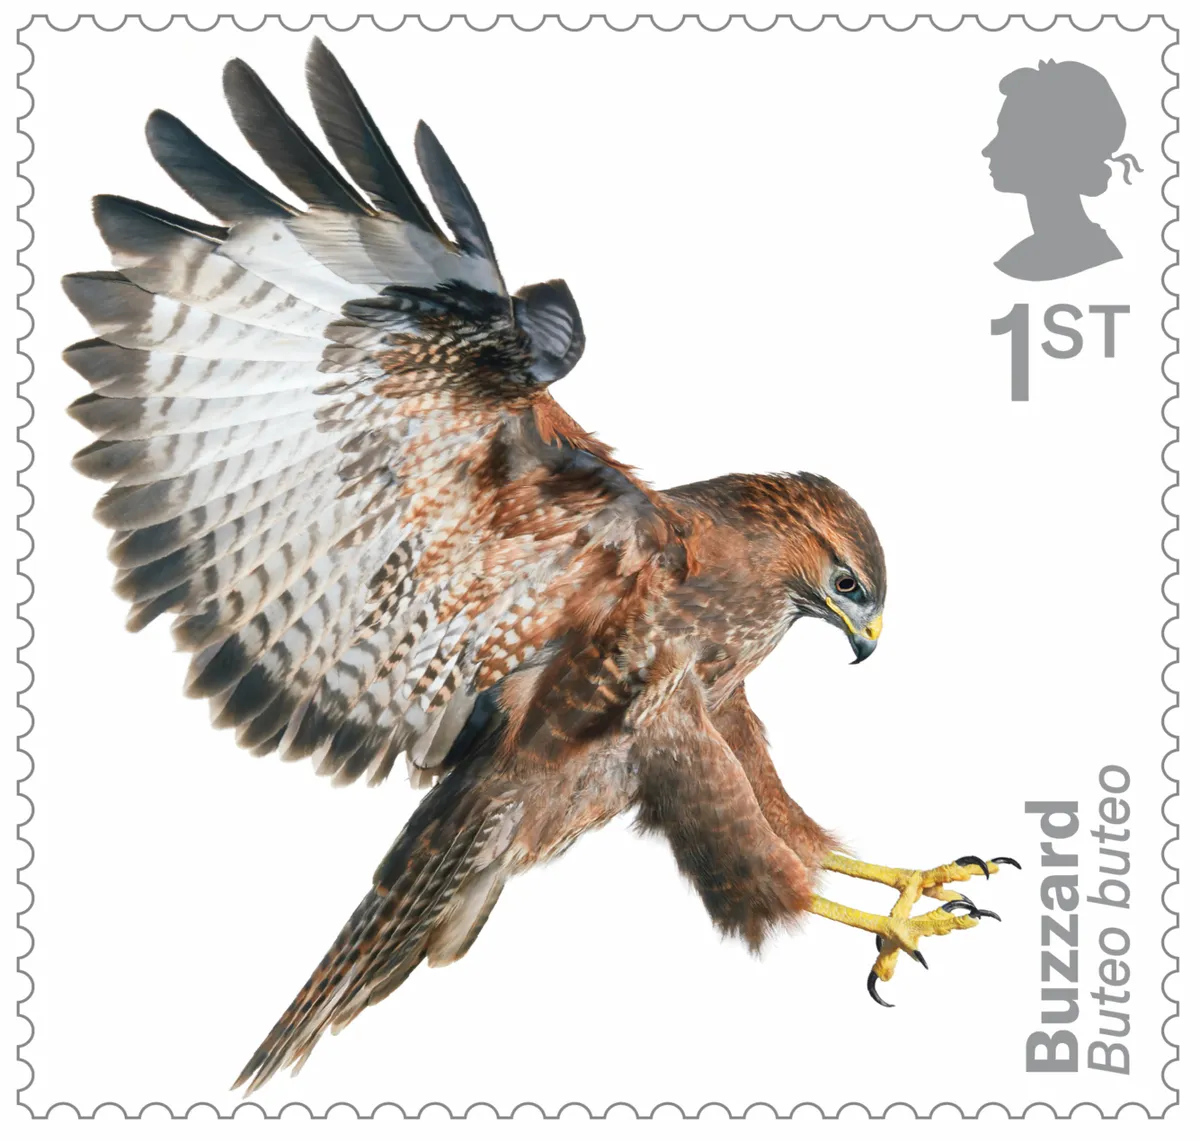 Bird of prey stamp collection - buzzard. © Tim Flach/Royal Mail.